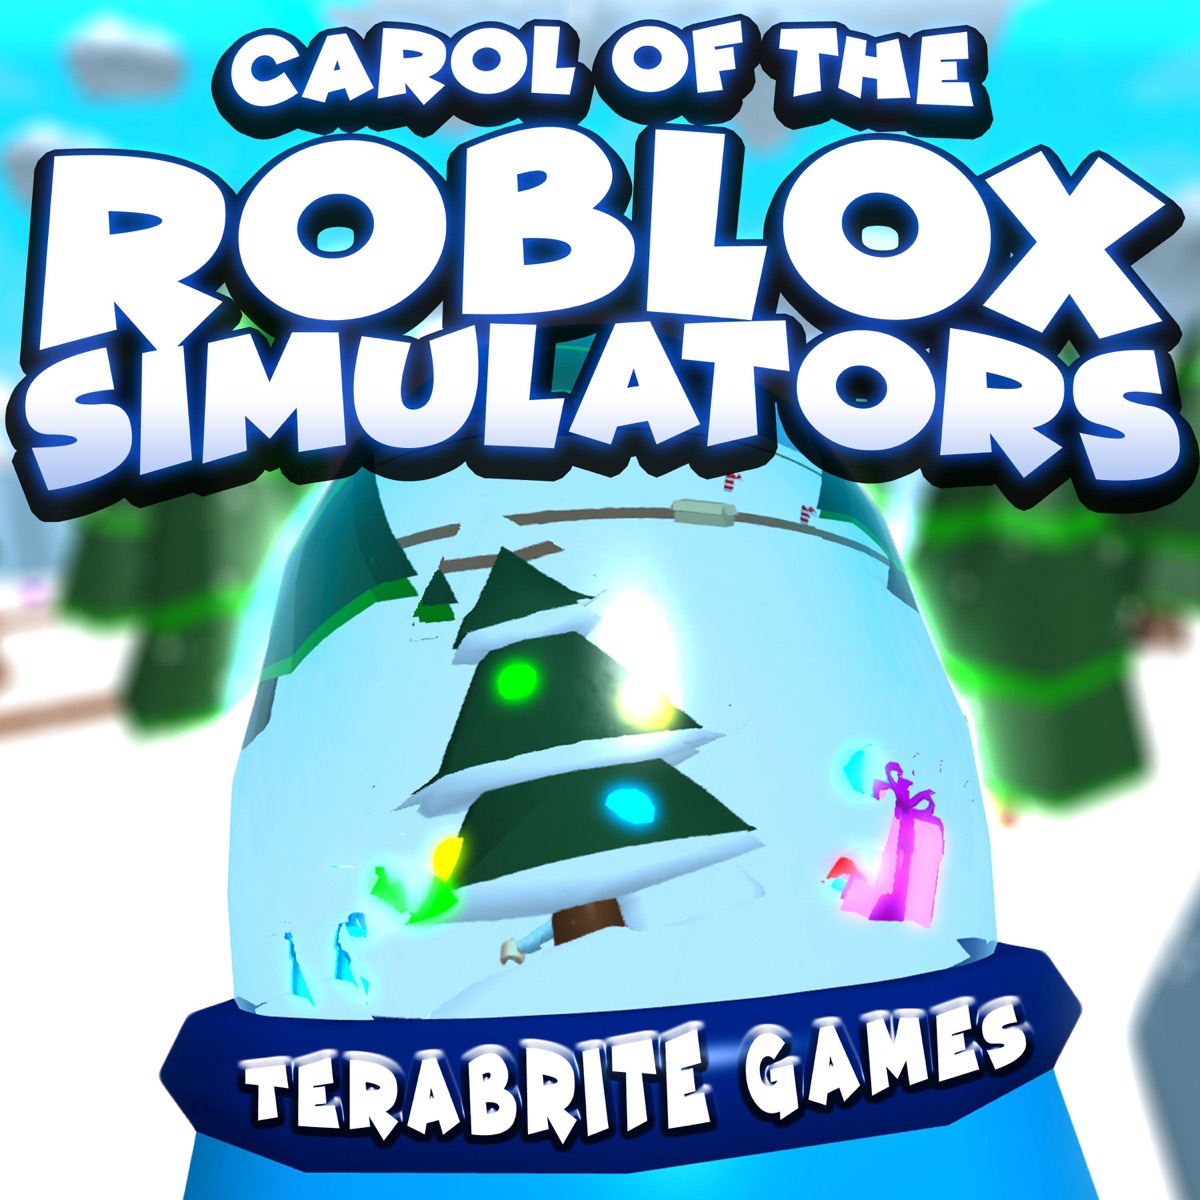 Carol Of The Roblox Simulators Terabrite Games Lyrics Ratings And Reviews - smooth jazz roblox